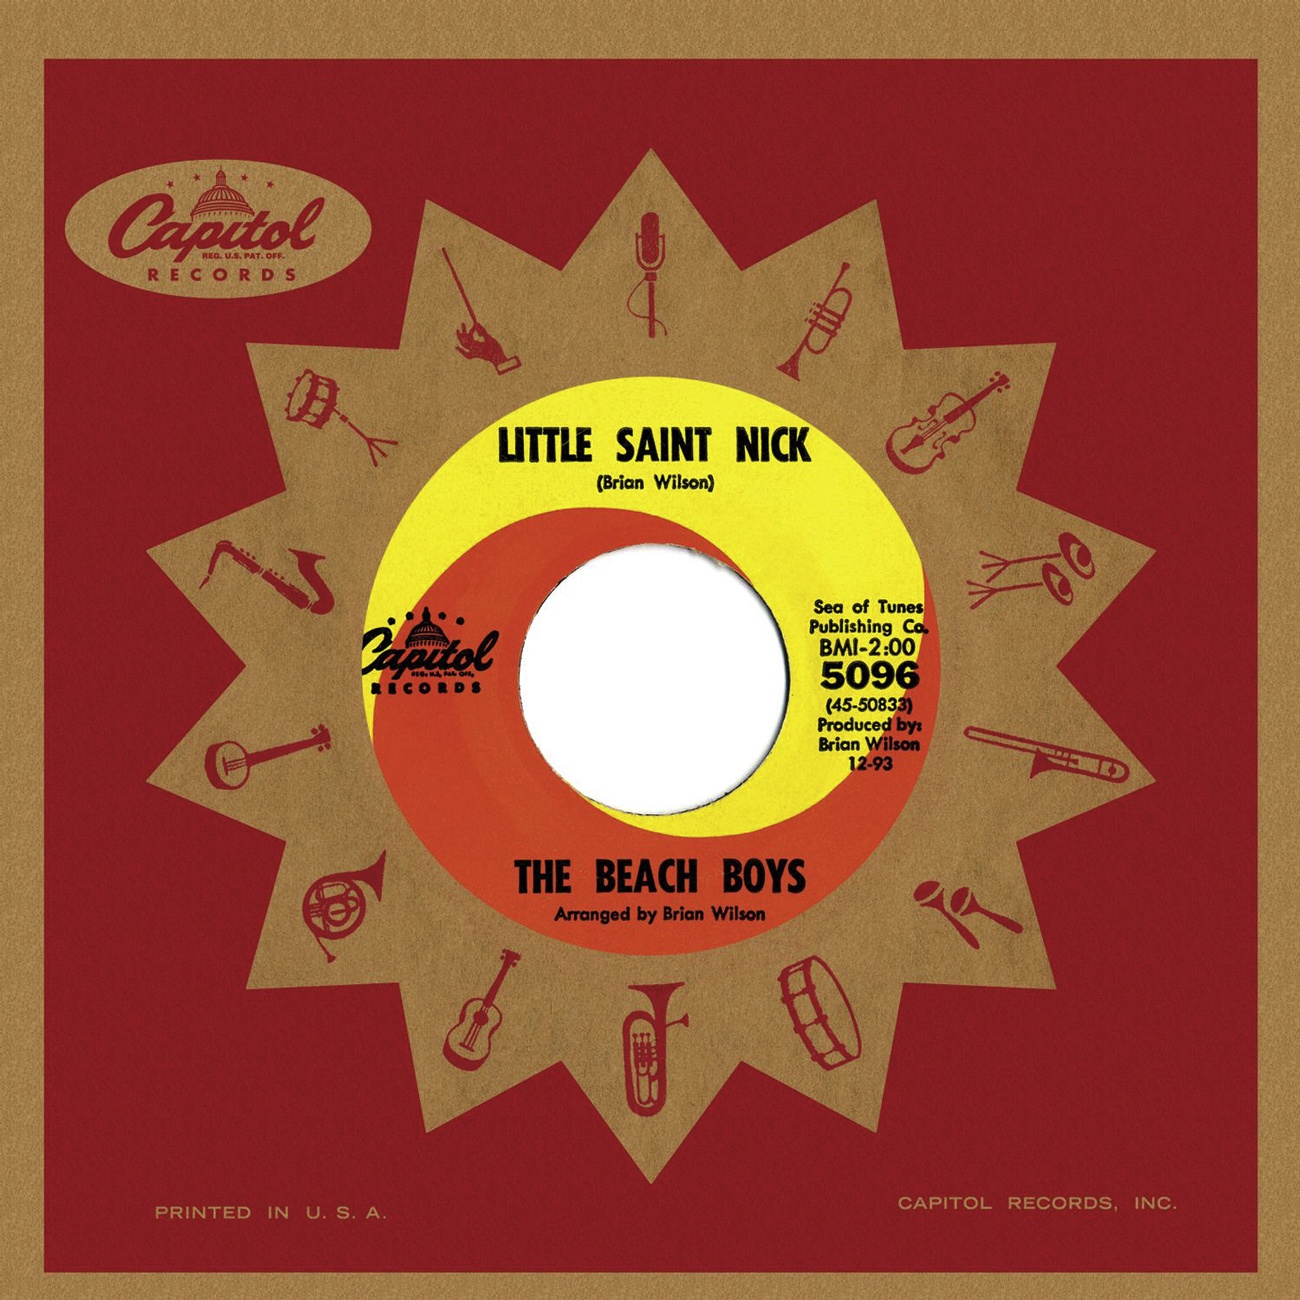 Little Saint Nick (2008 Stereo Mix)